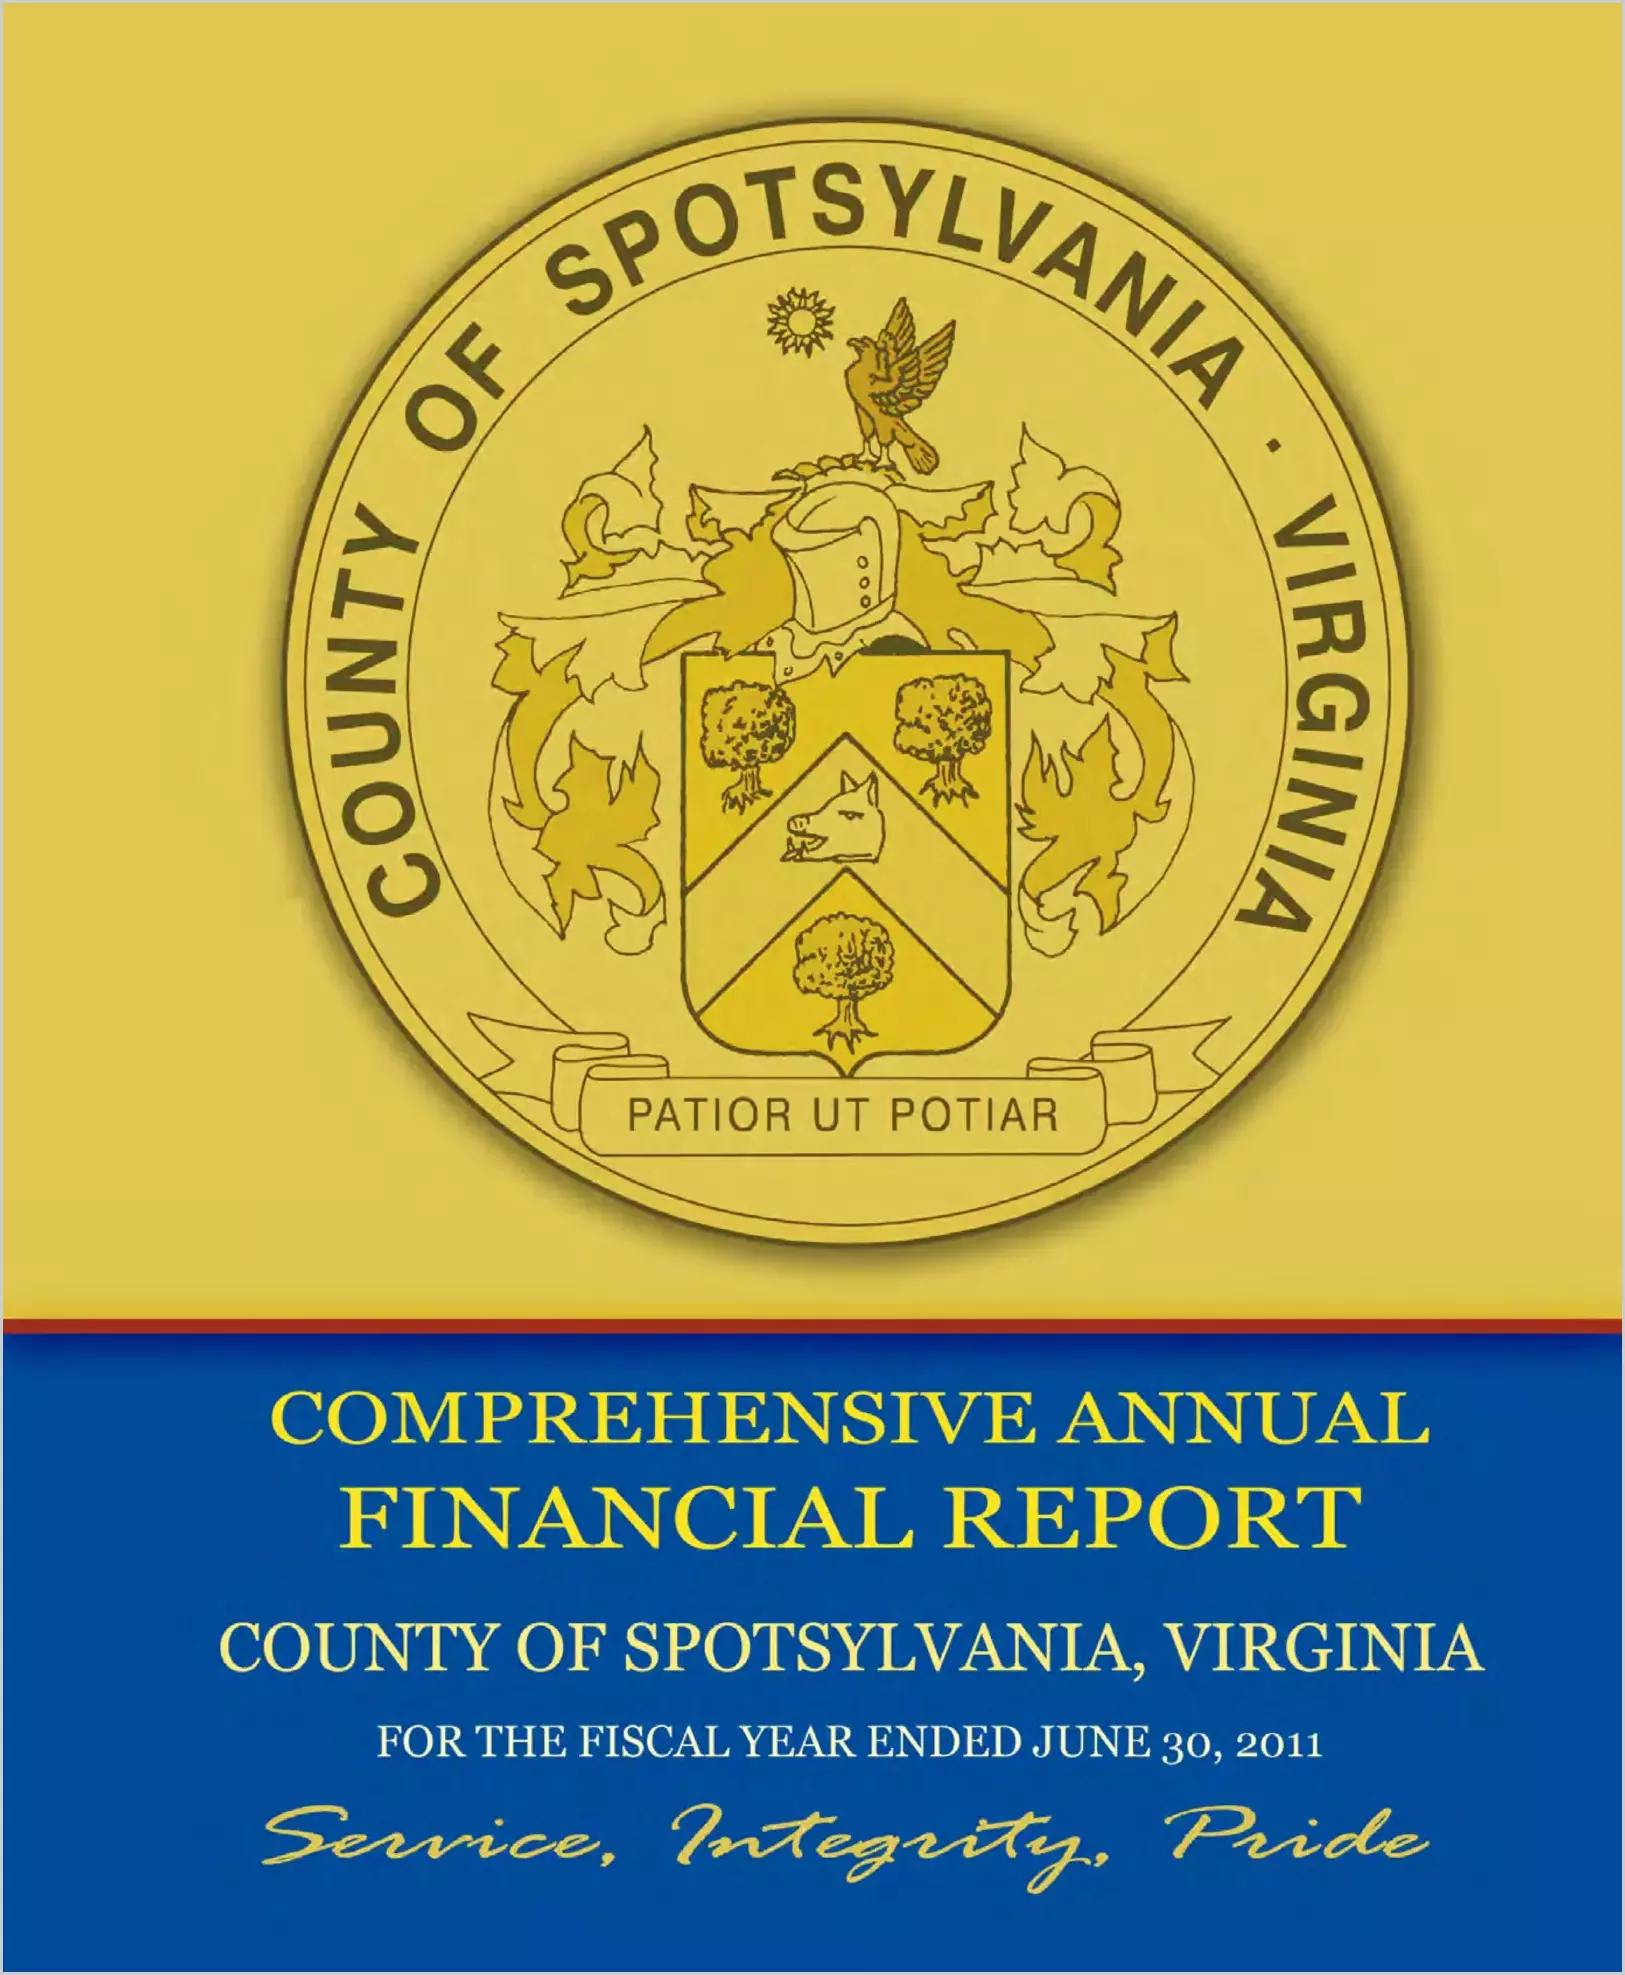 2011 Annual Financial Report for County of Spotsylvania